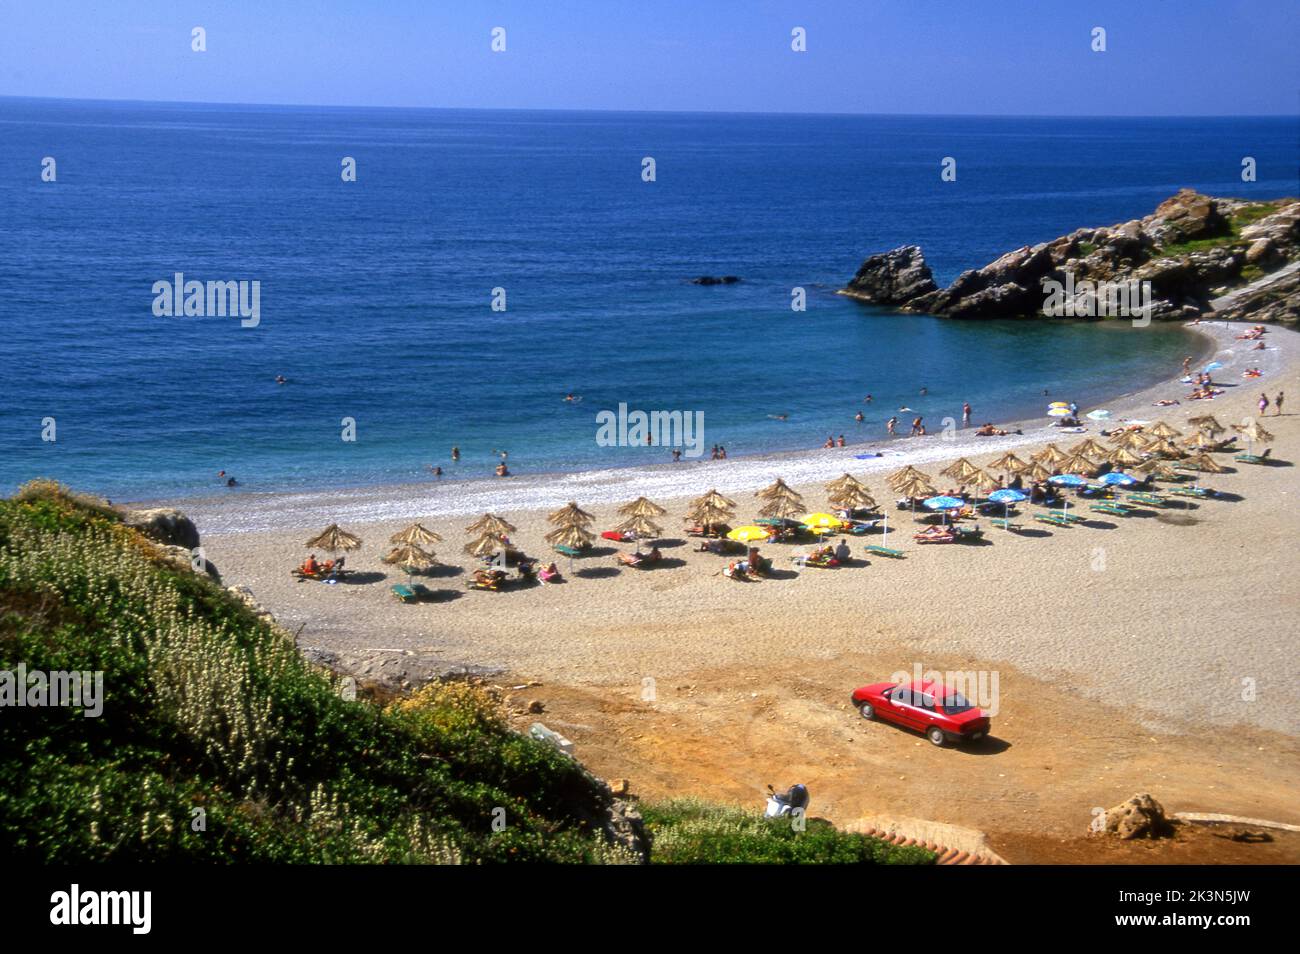 A beautiful beach on the Greek island of Crete in the Aegean Sea. Stock Photo